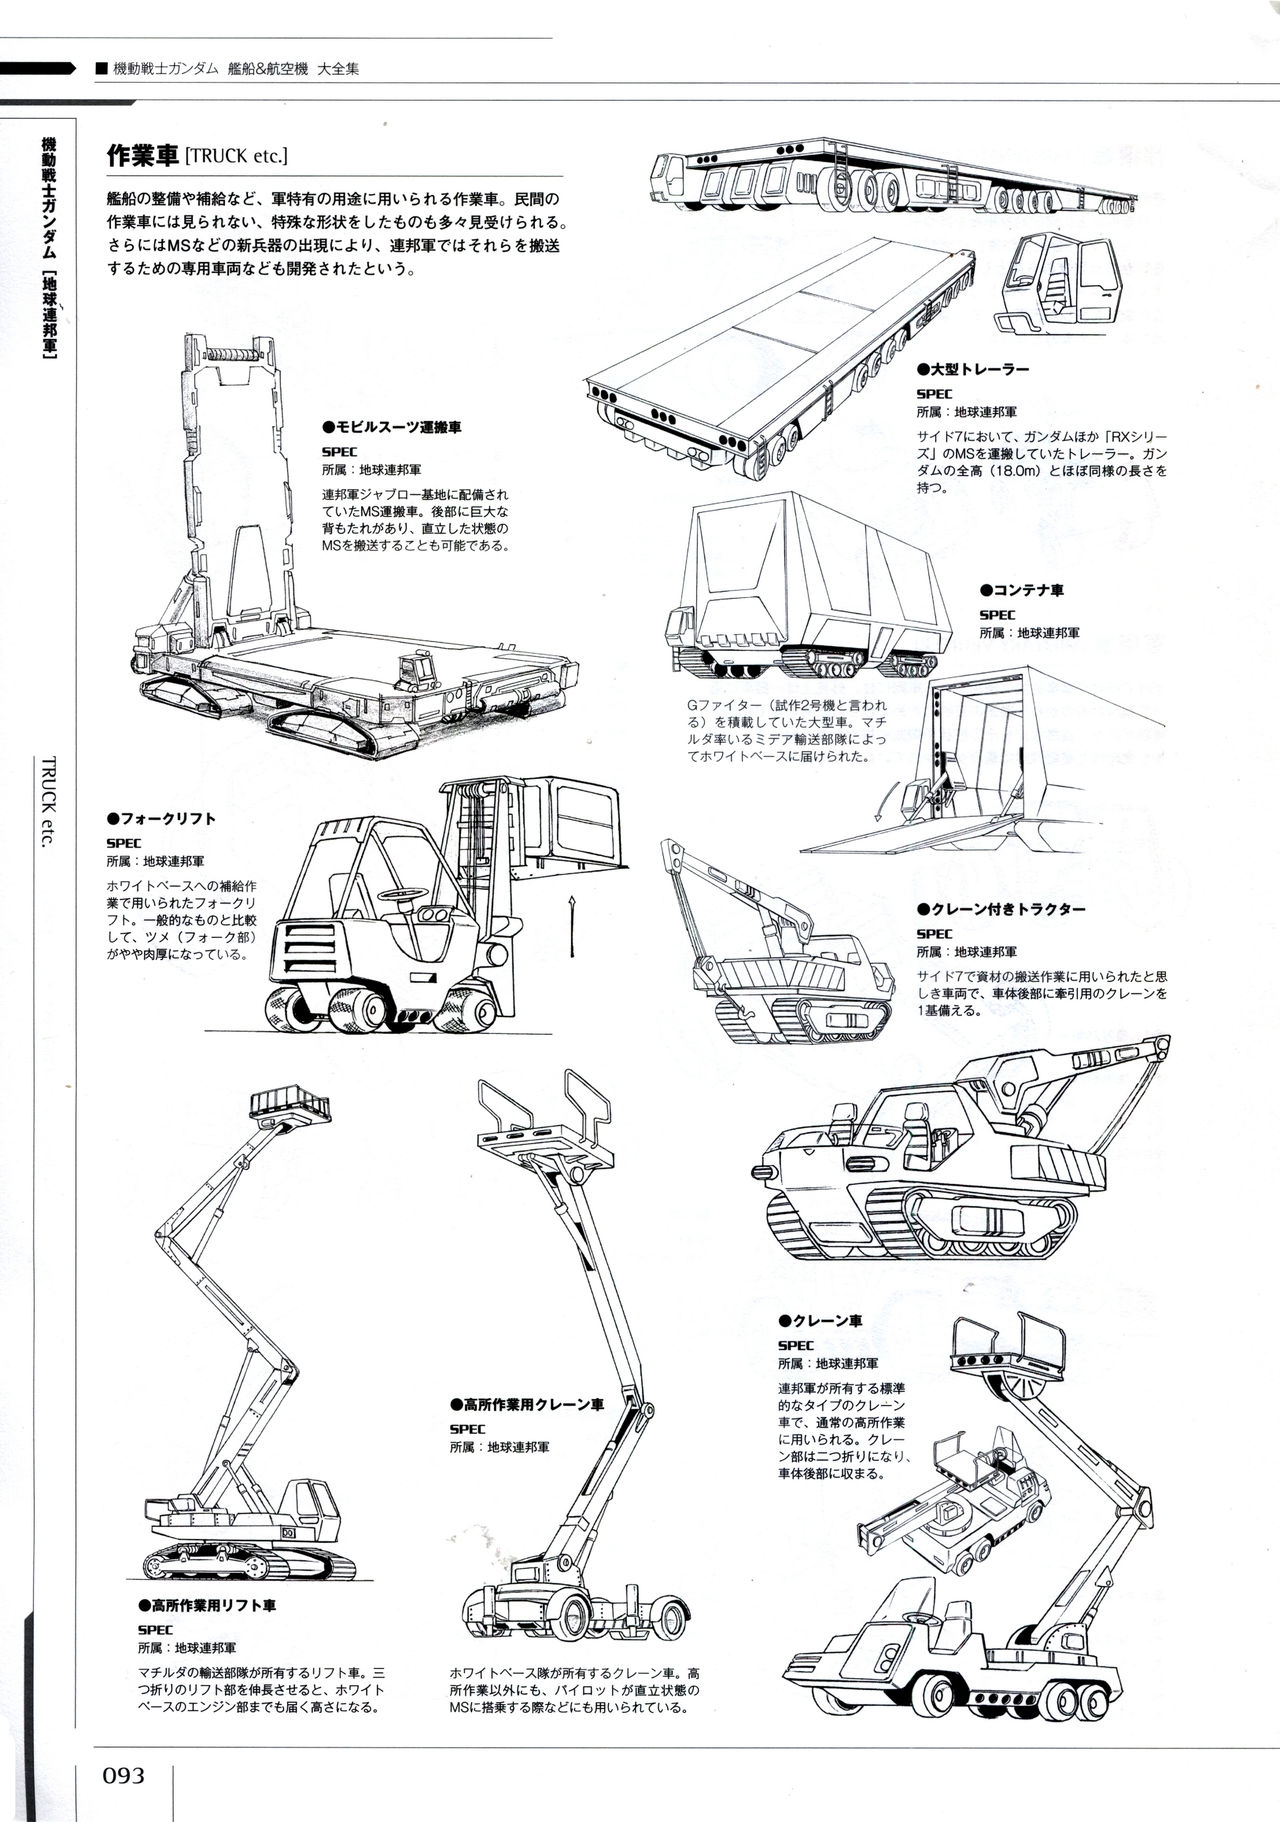 Mobile Suit Gundam - Ship & Aerospace Plane Encyclopedia - Revised Edition 98